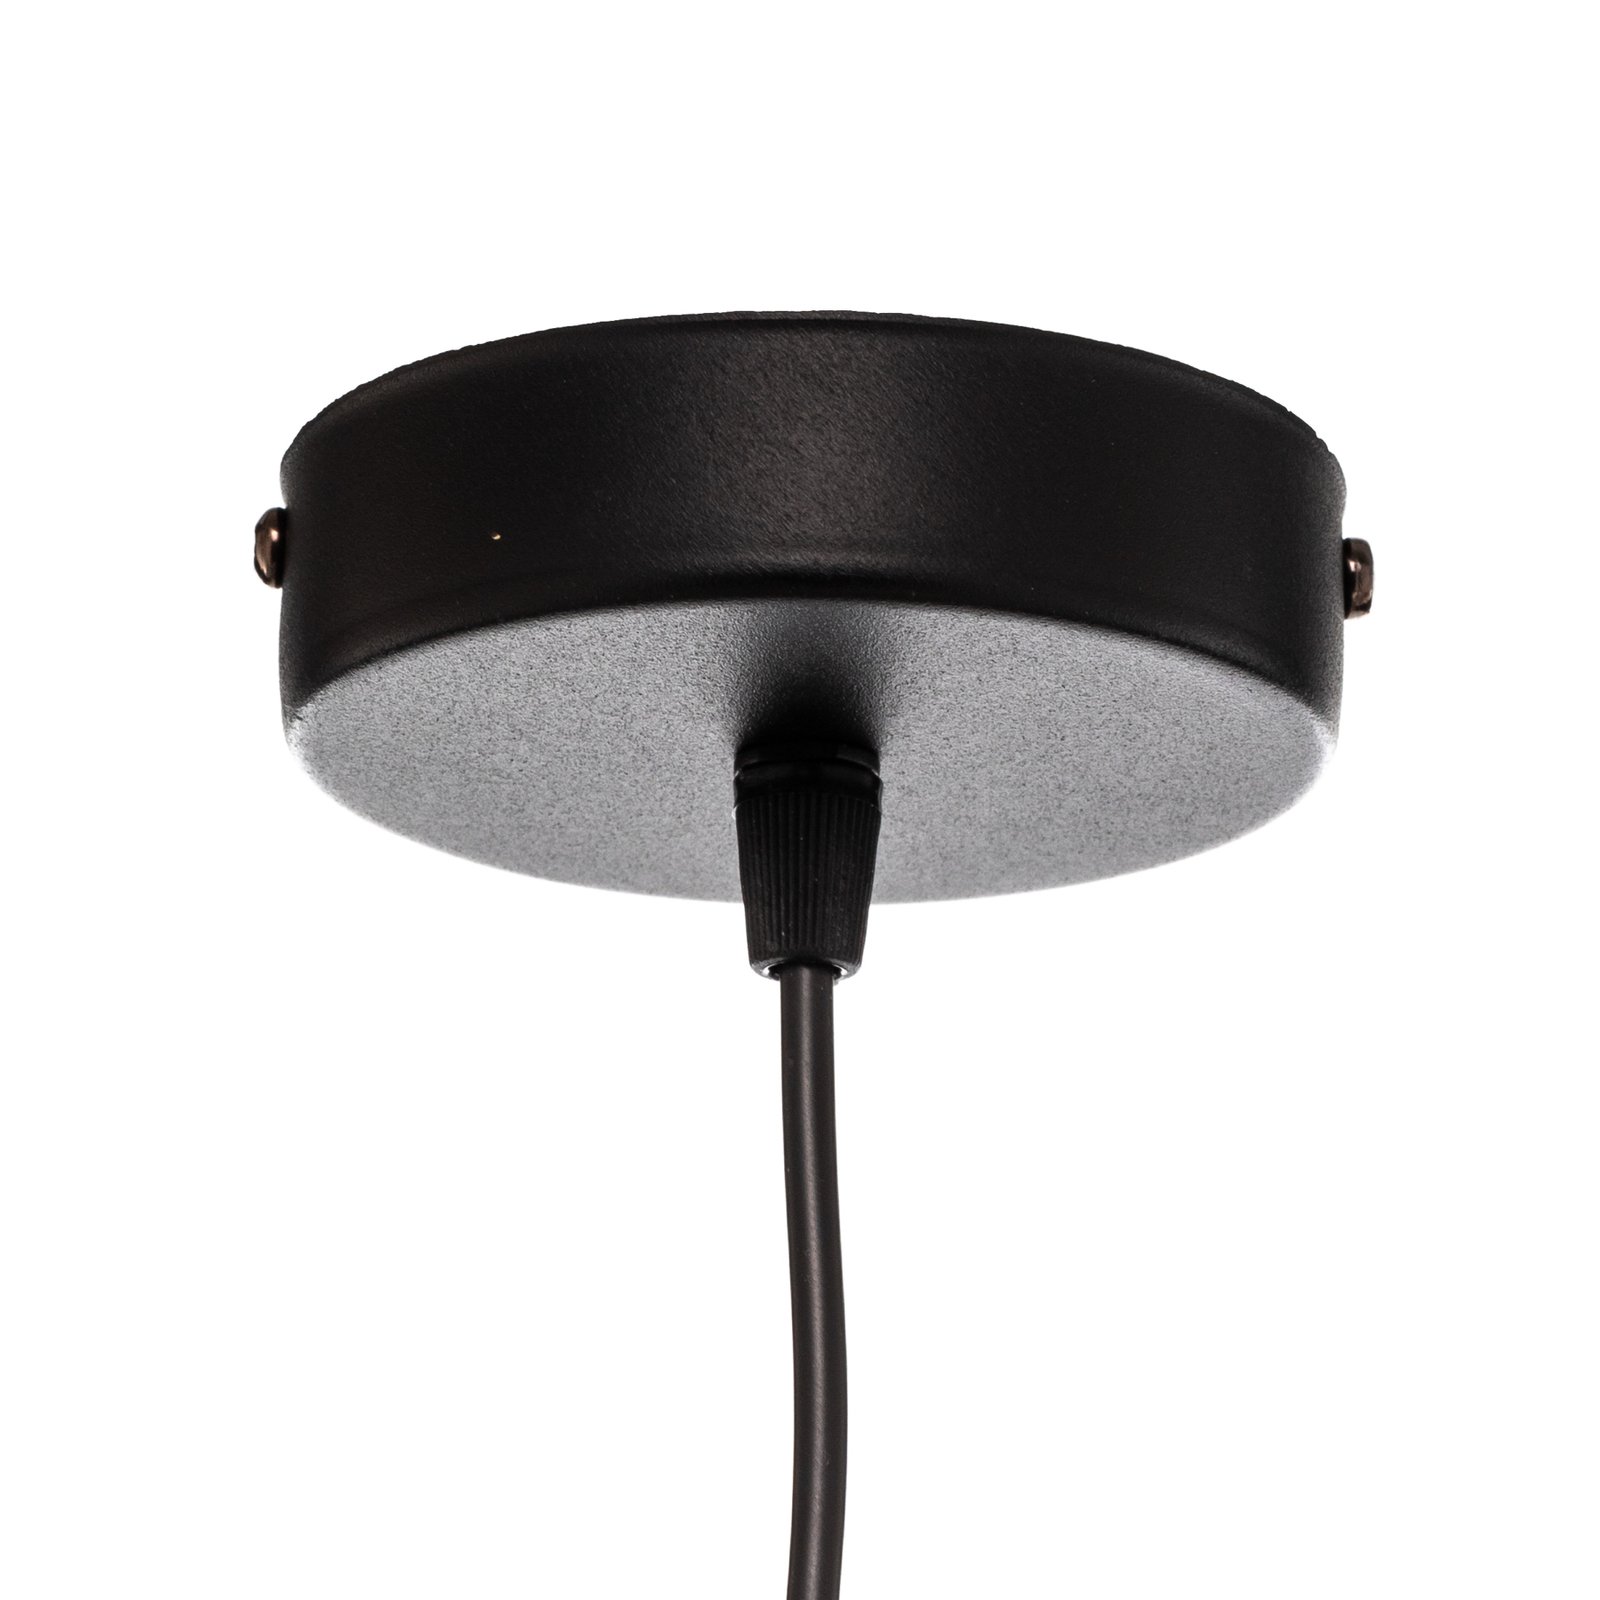 Hanglamp Boho, Ø 45 cm 1-lamp groen/jute